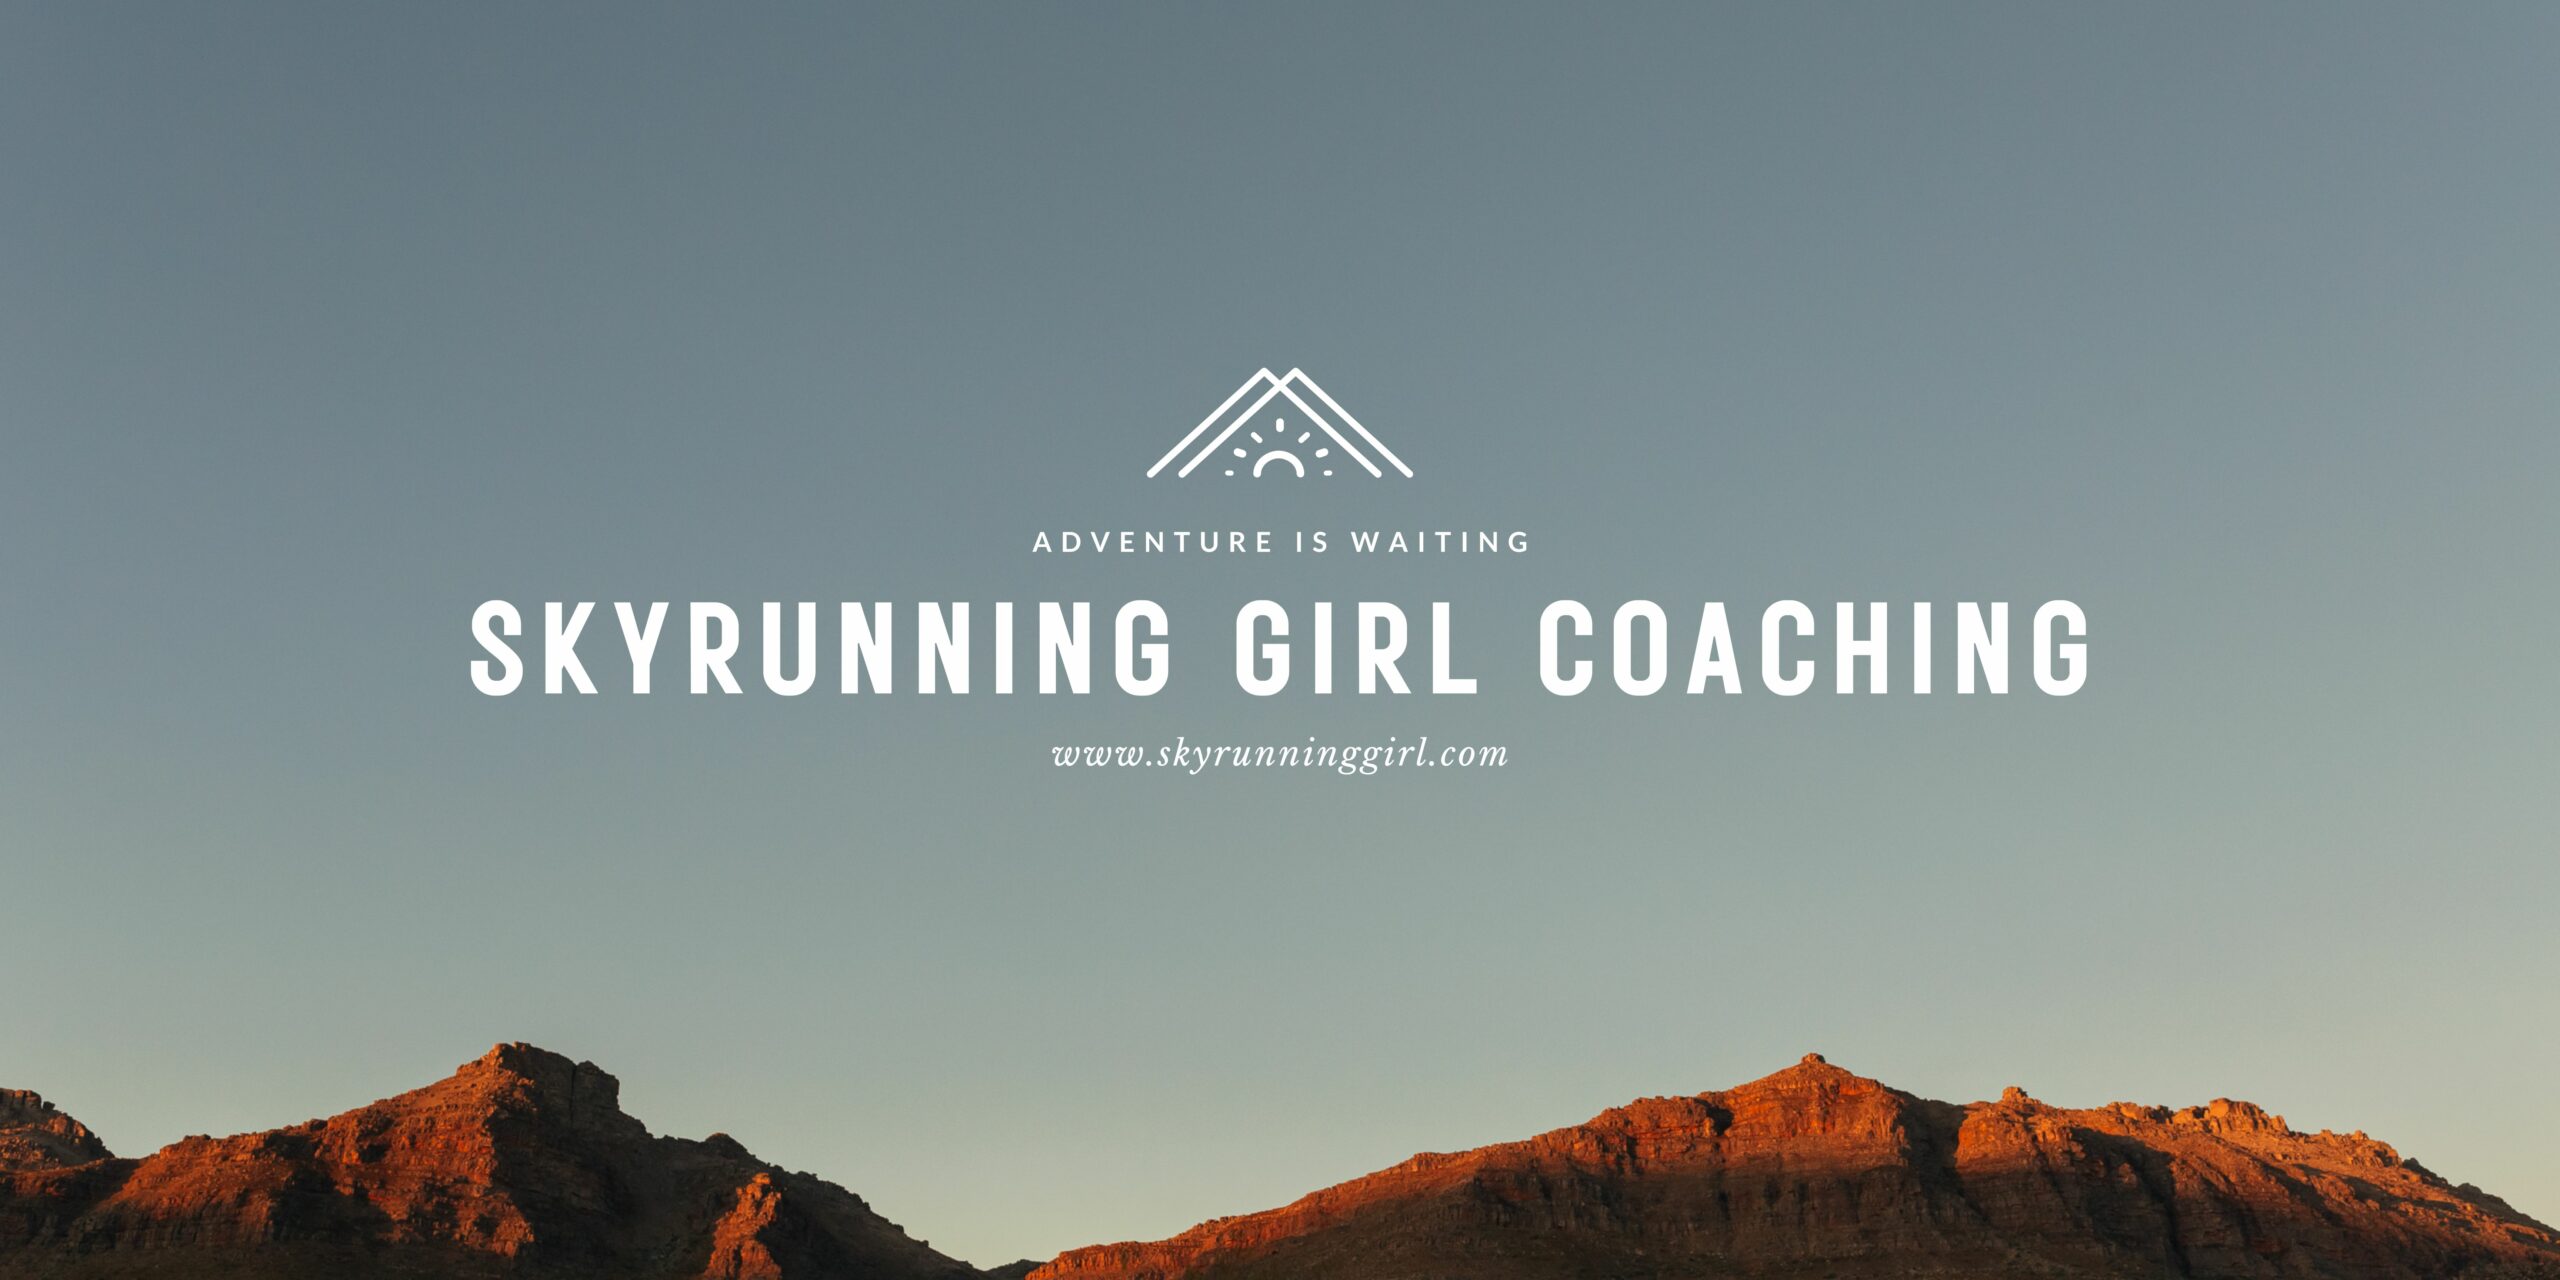 skyrunning girl naia tower-pierce mountain runner coaching female athletes trail runners ultra running young new beginner